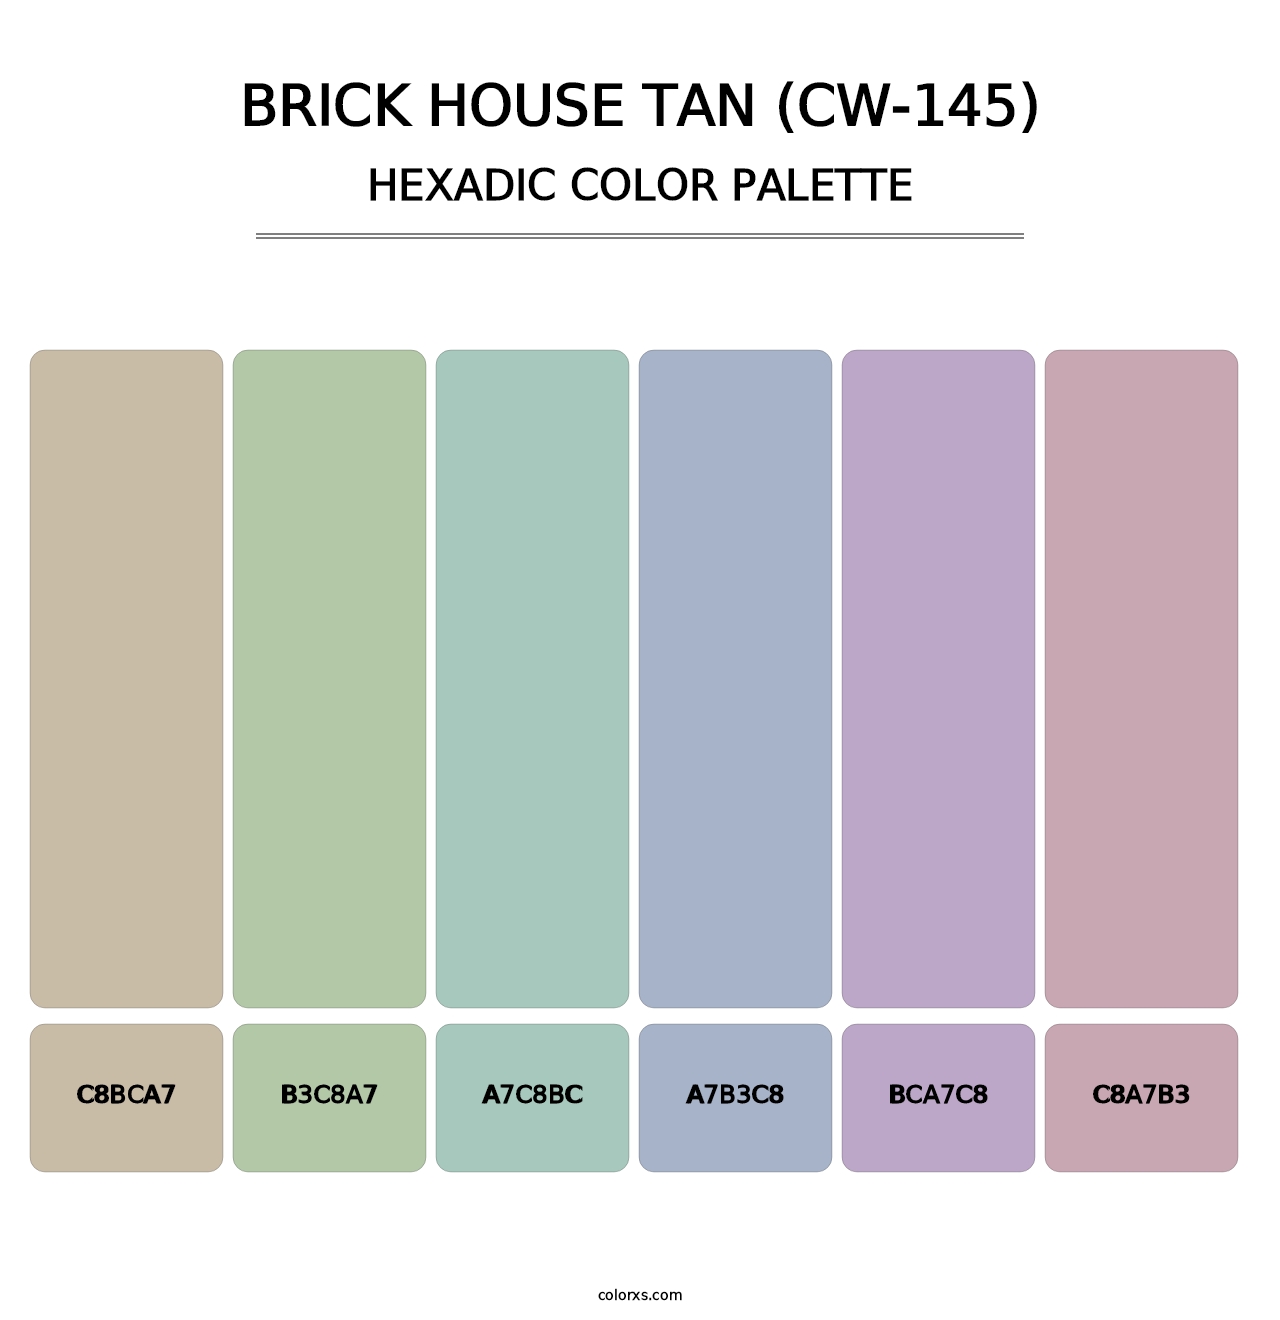 Brick House Tan (CW-145) - Hexadic Color Palette